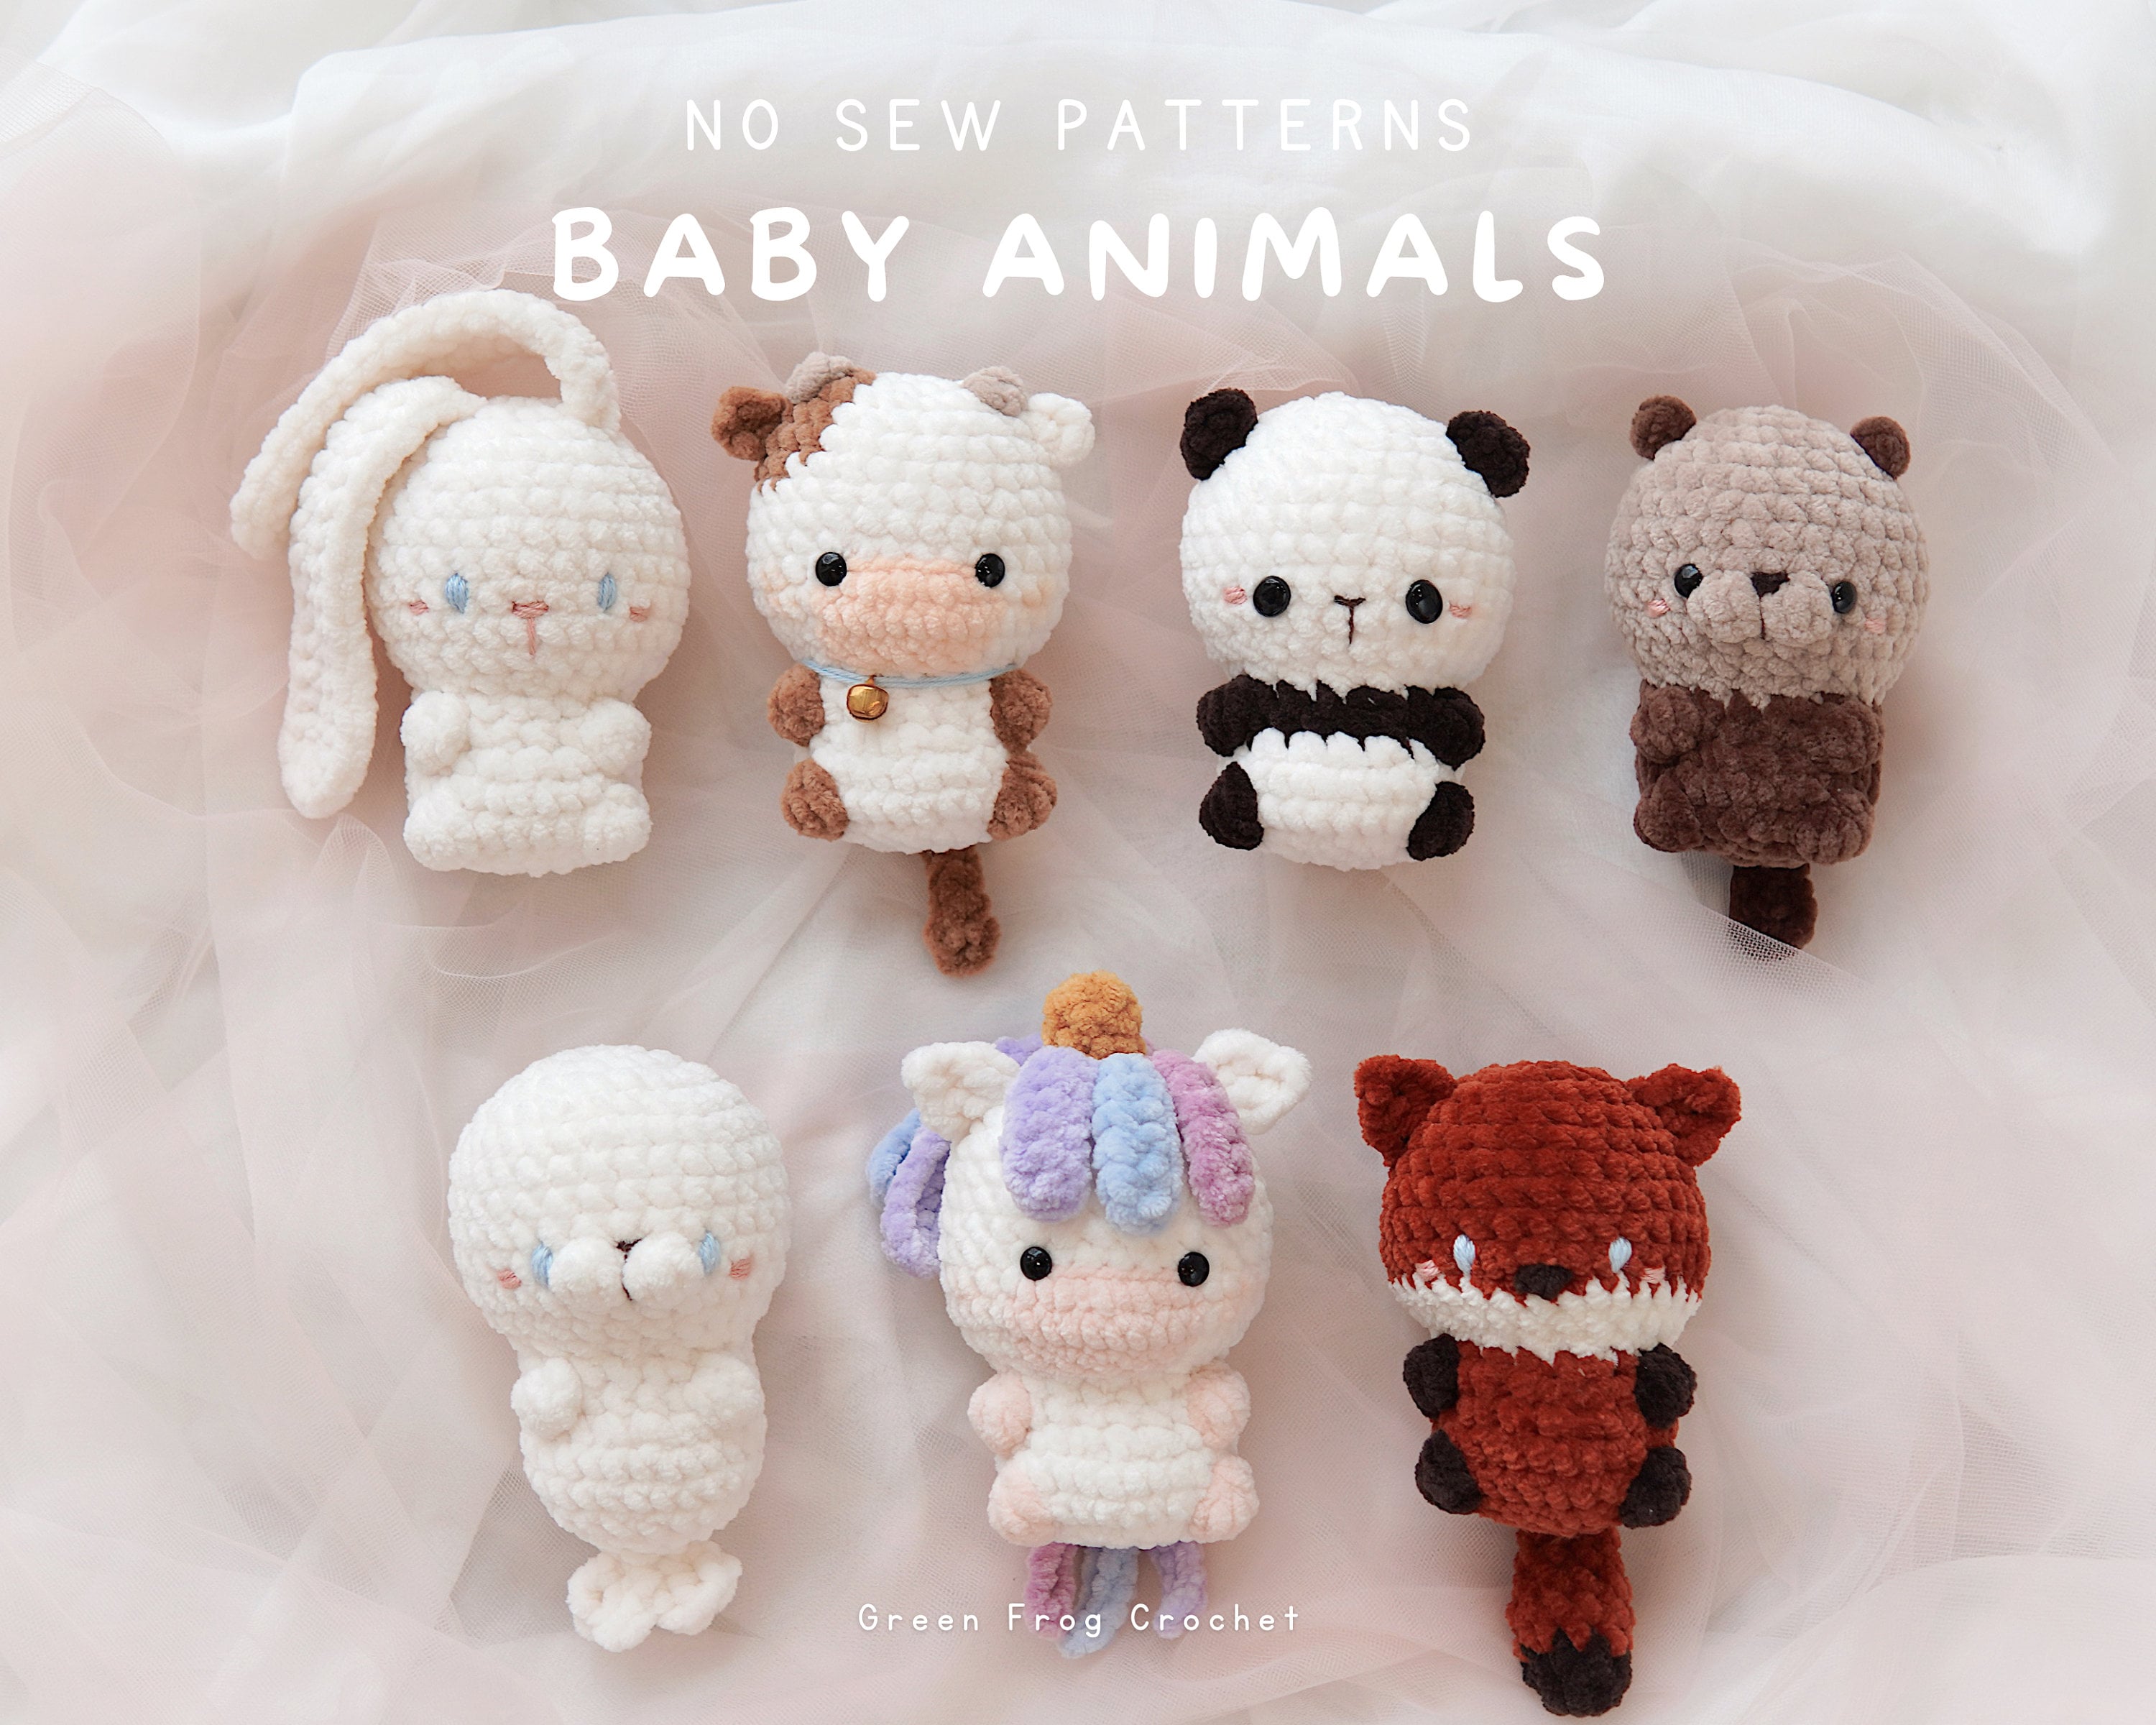 Cute Mini Crochet Projects & Kits  Crochet Animals & Gifts – Wee